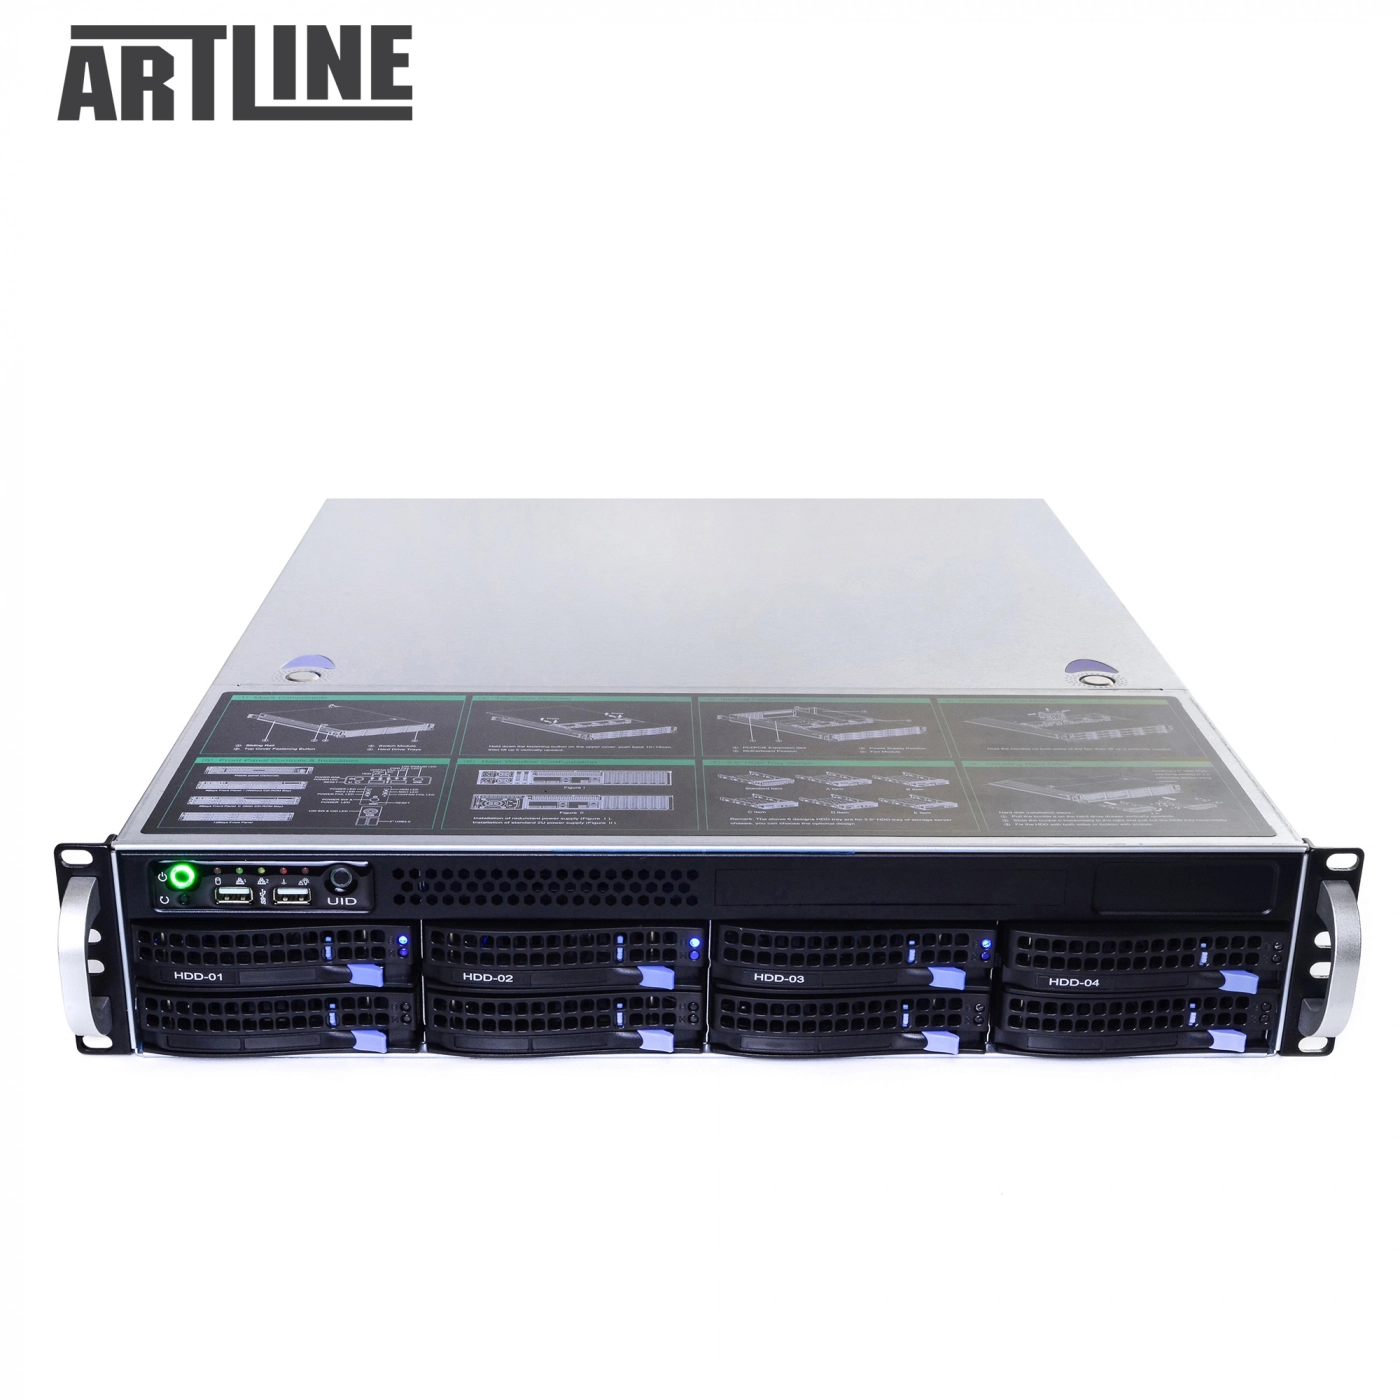 Купити Сервер ARTLINE Business R39v15 - фото 11